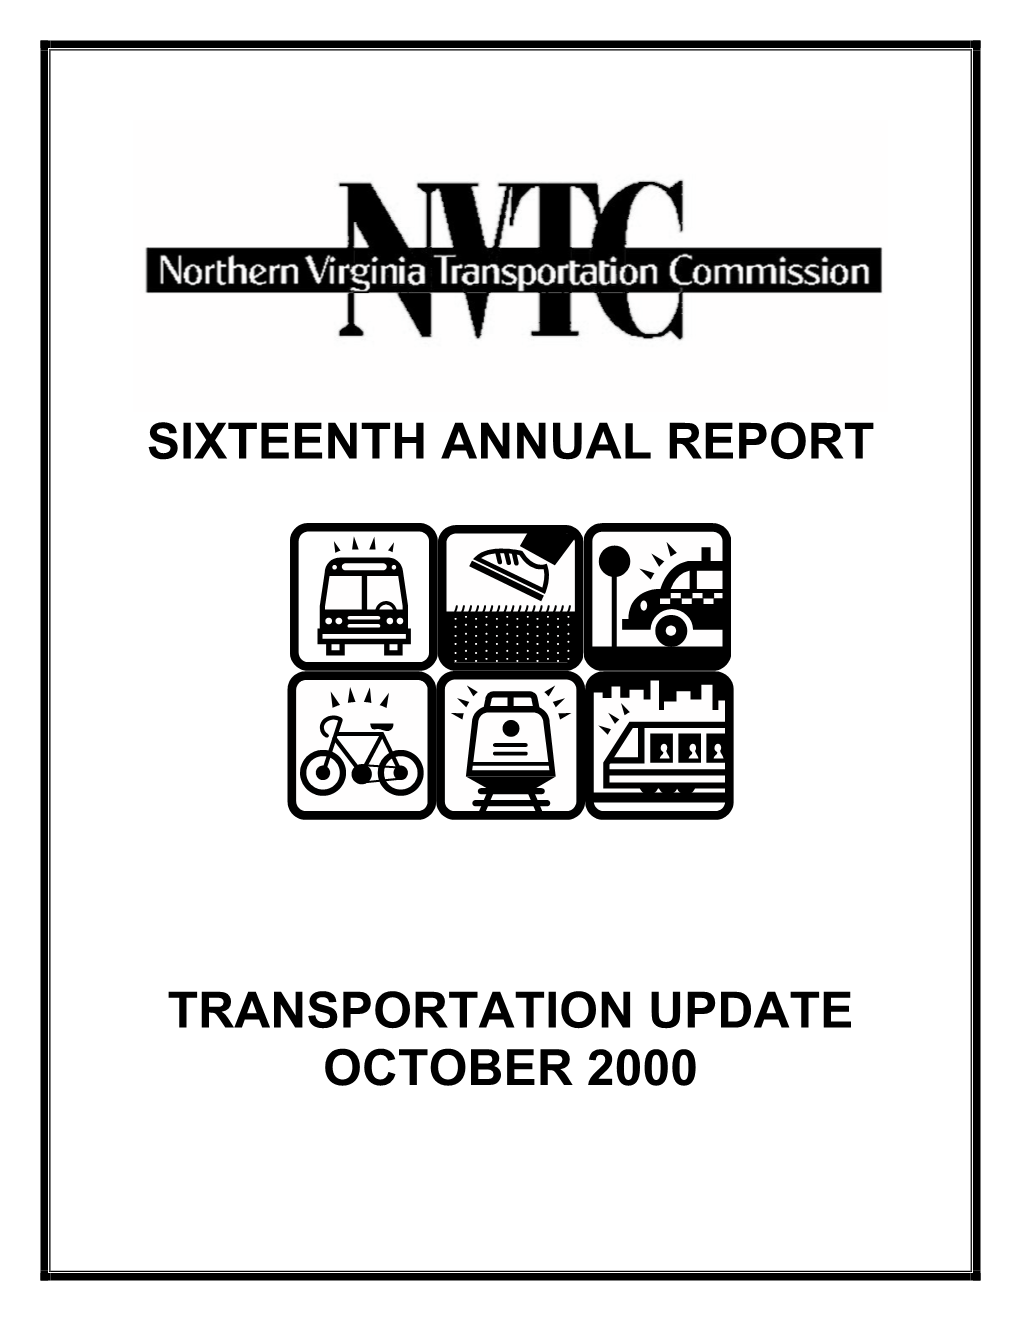 Sixteenth Annual Report Transportation Update